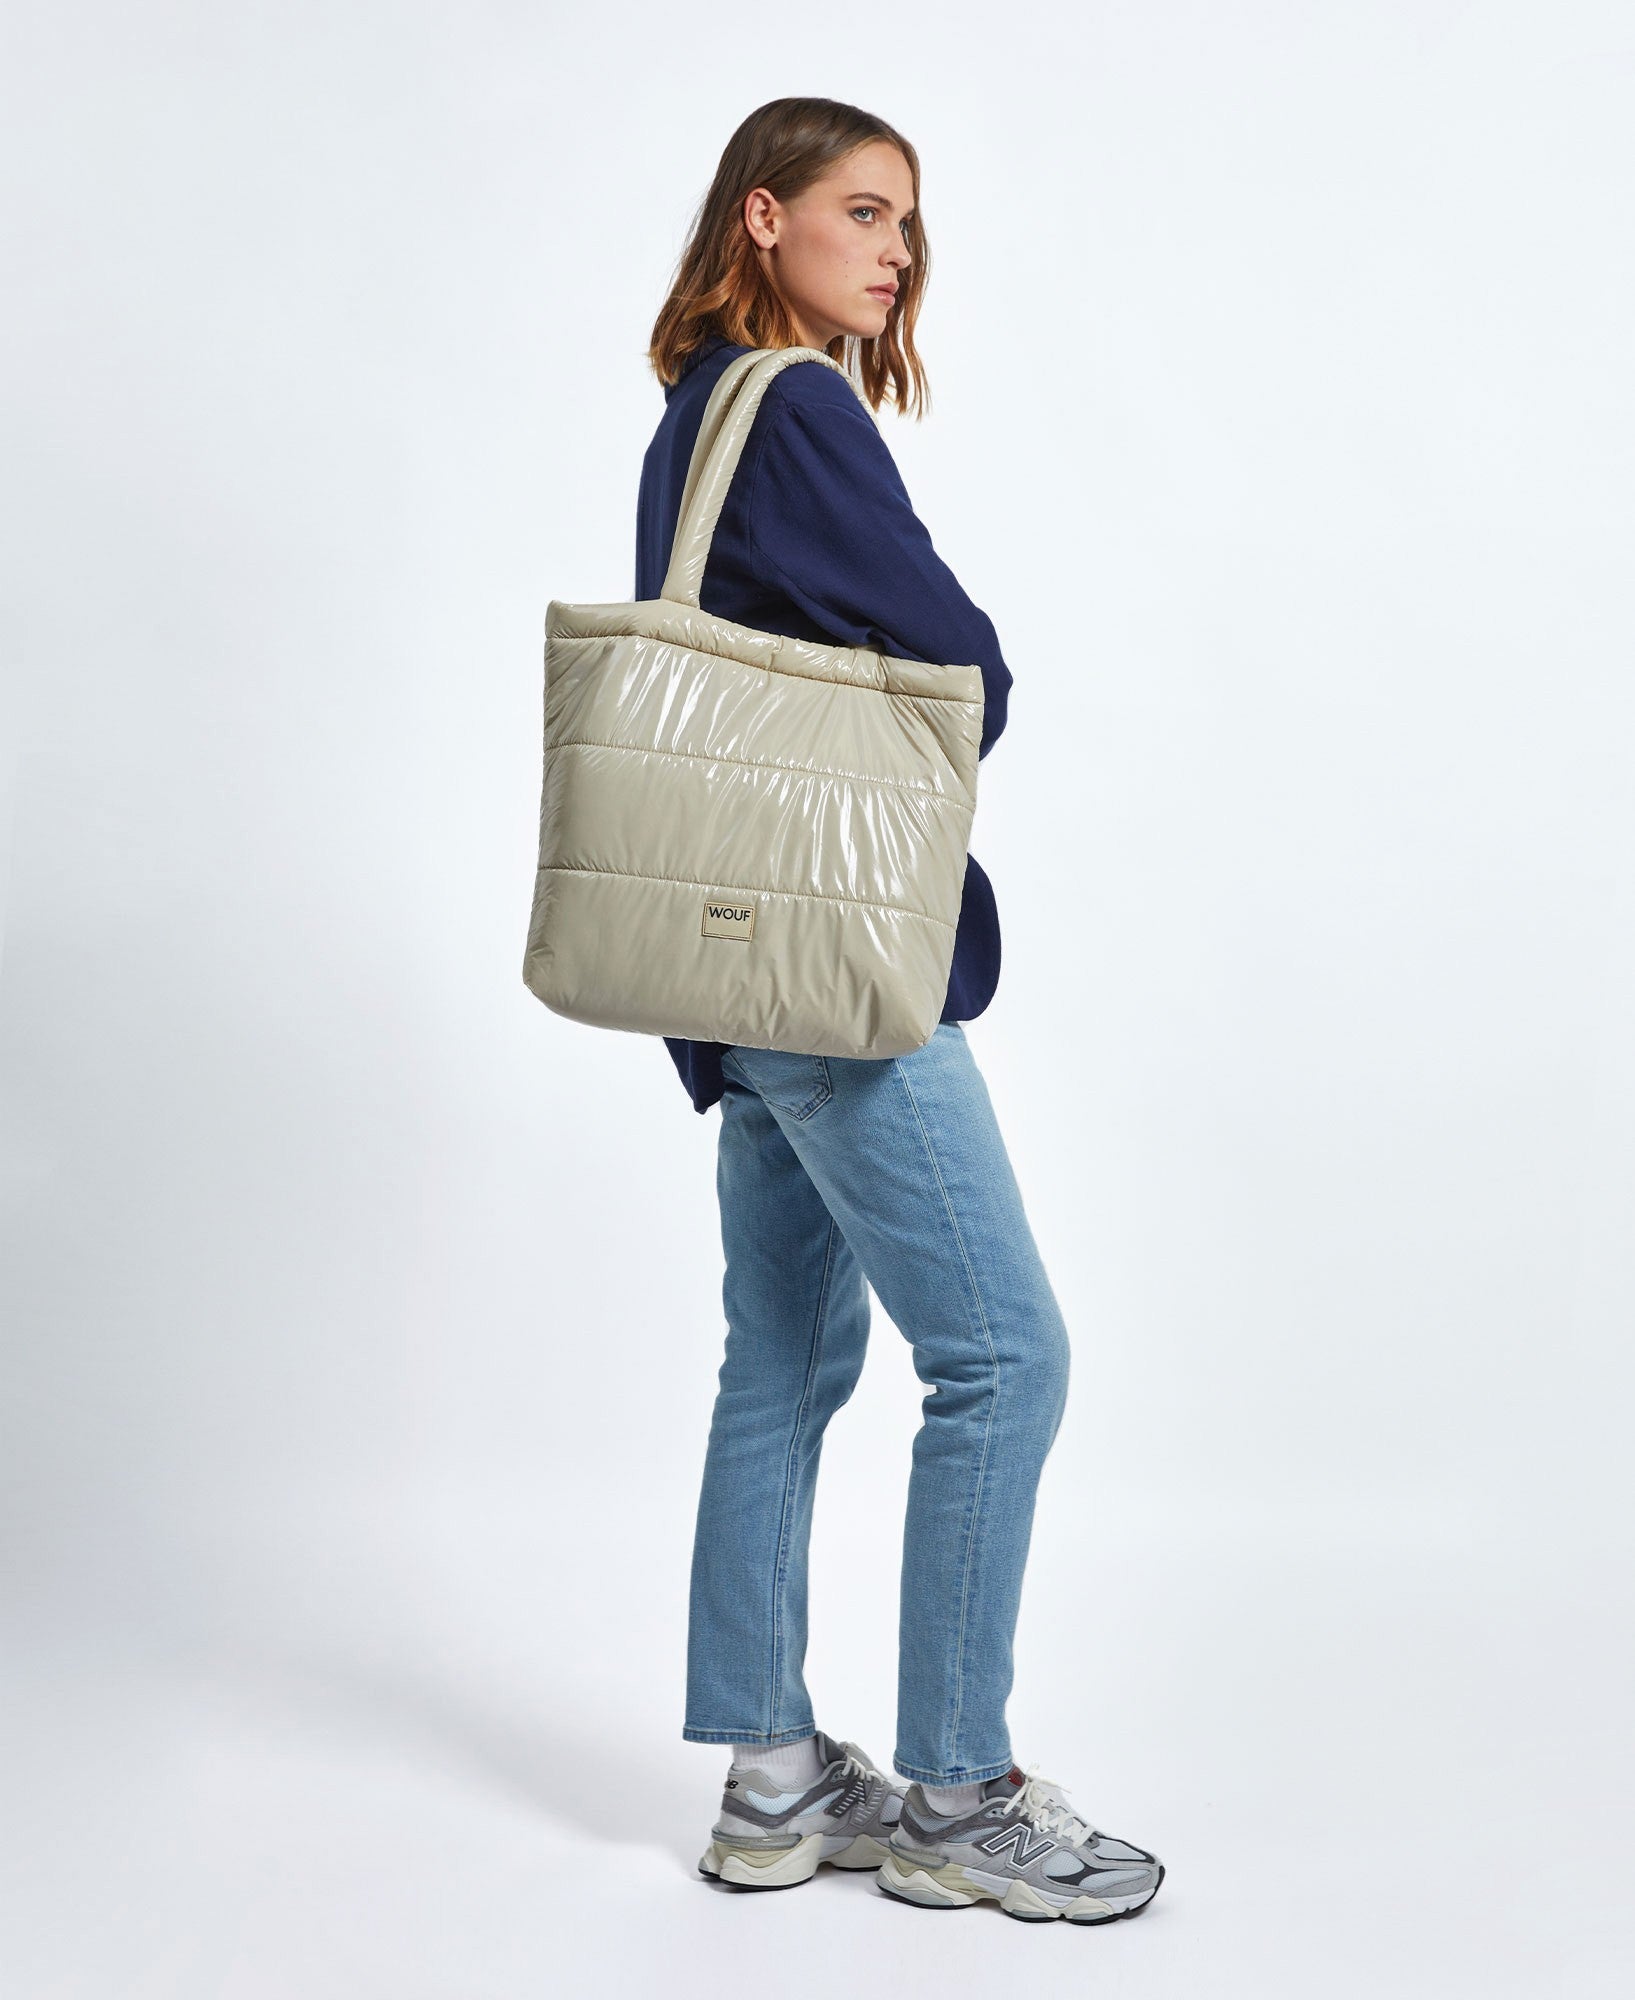 Everyday Essentials – Women Wearing Lightweight Bag